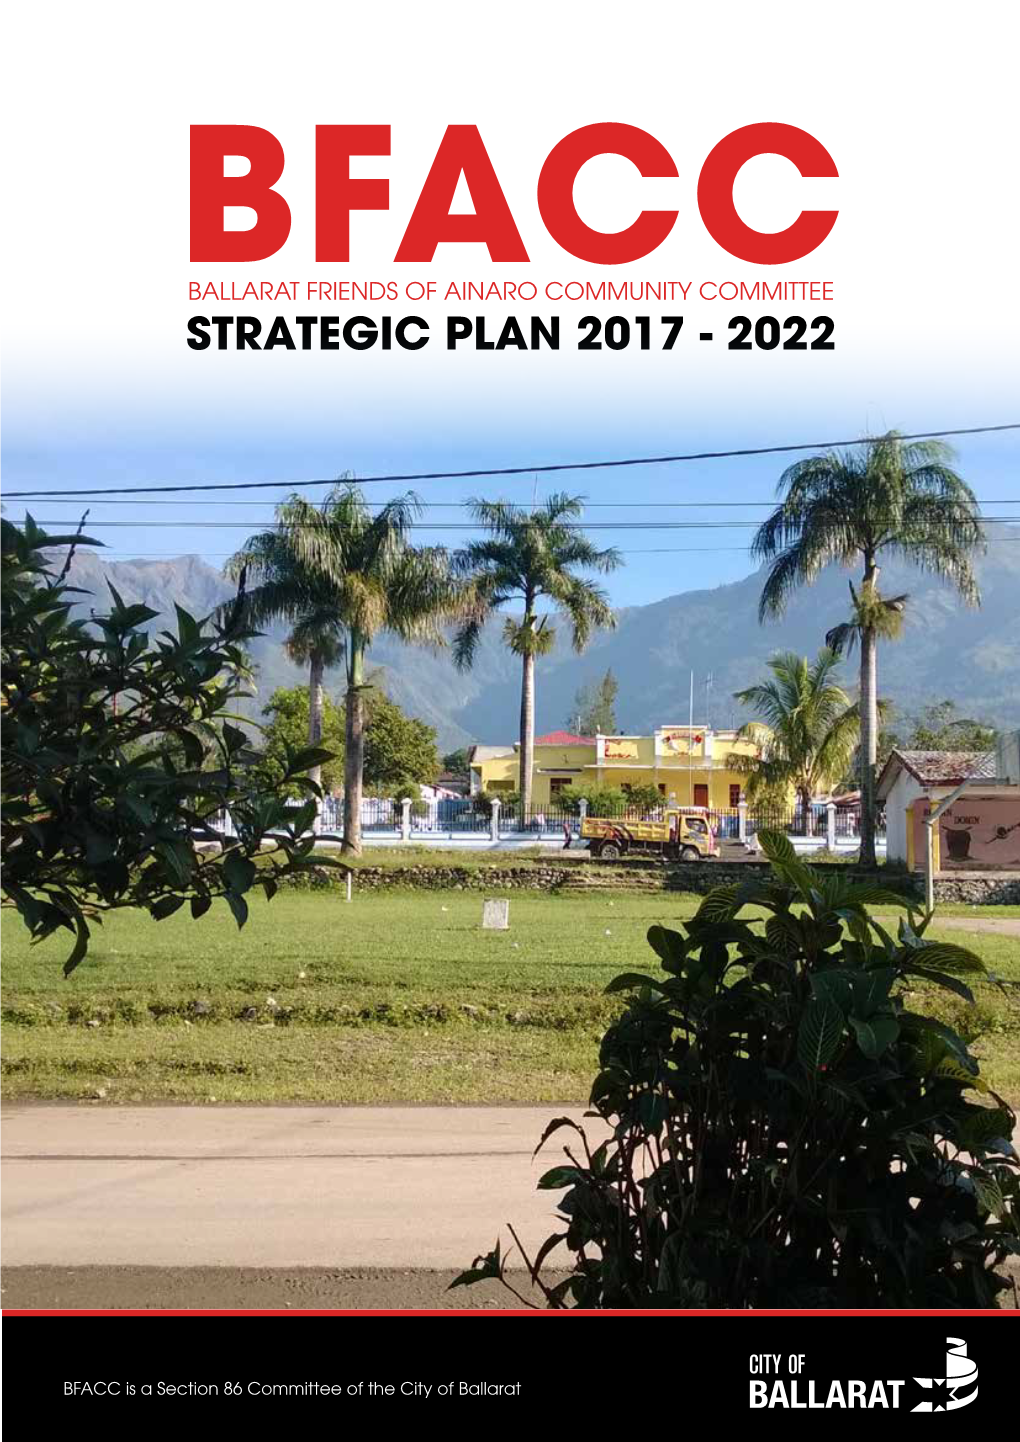 Ballarat Friends of Ainaro Community Committee Strategic Plan 2017-2022